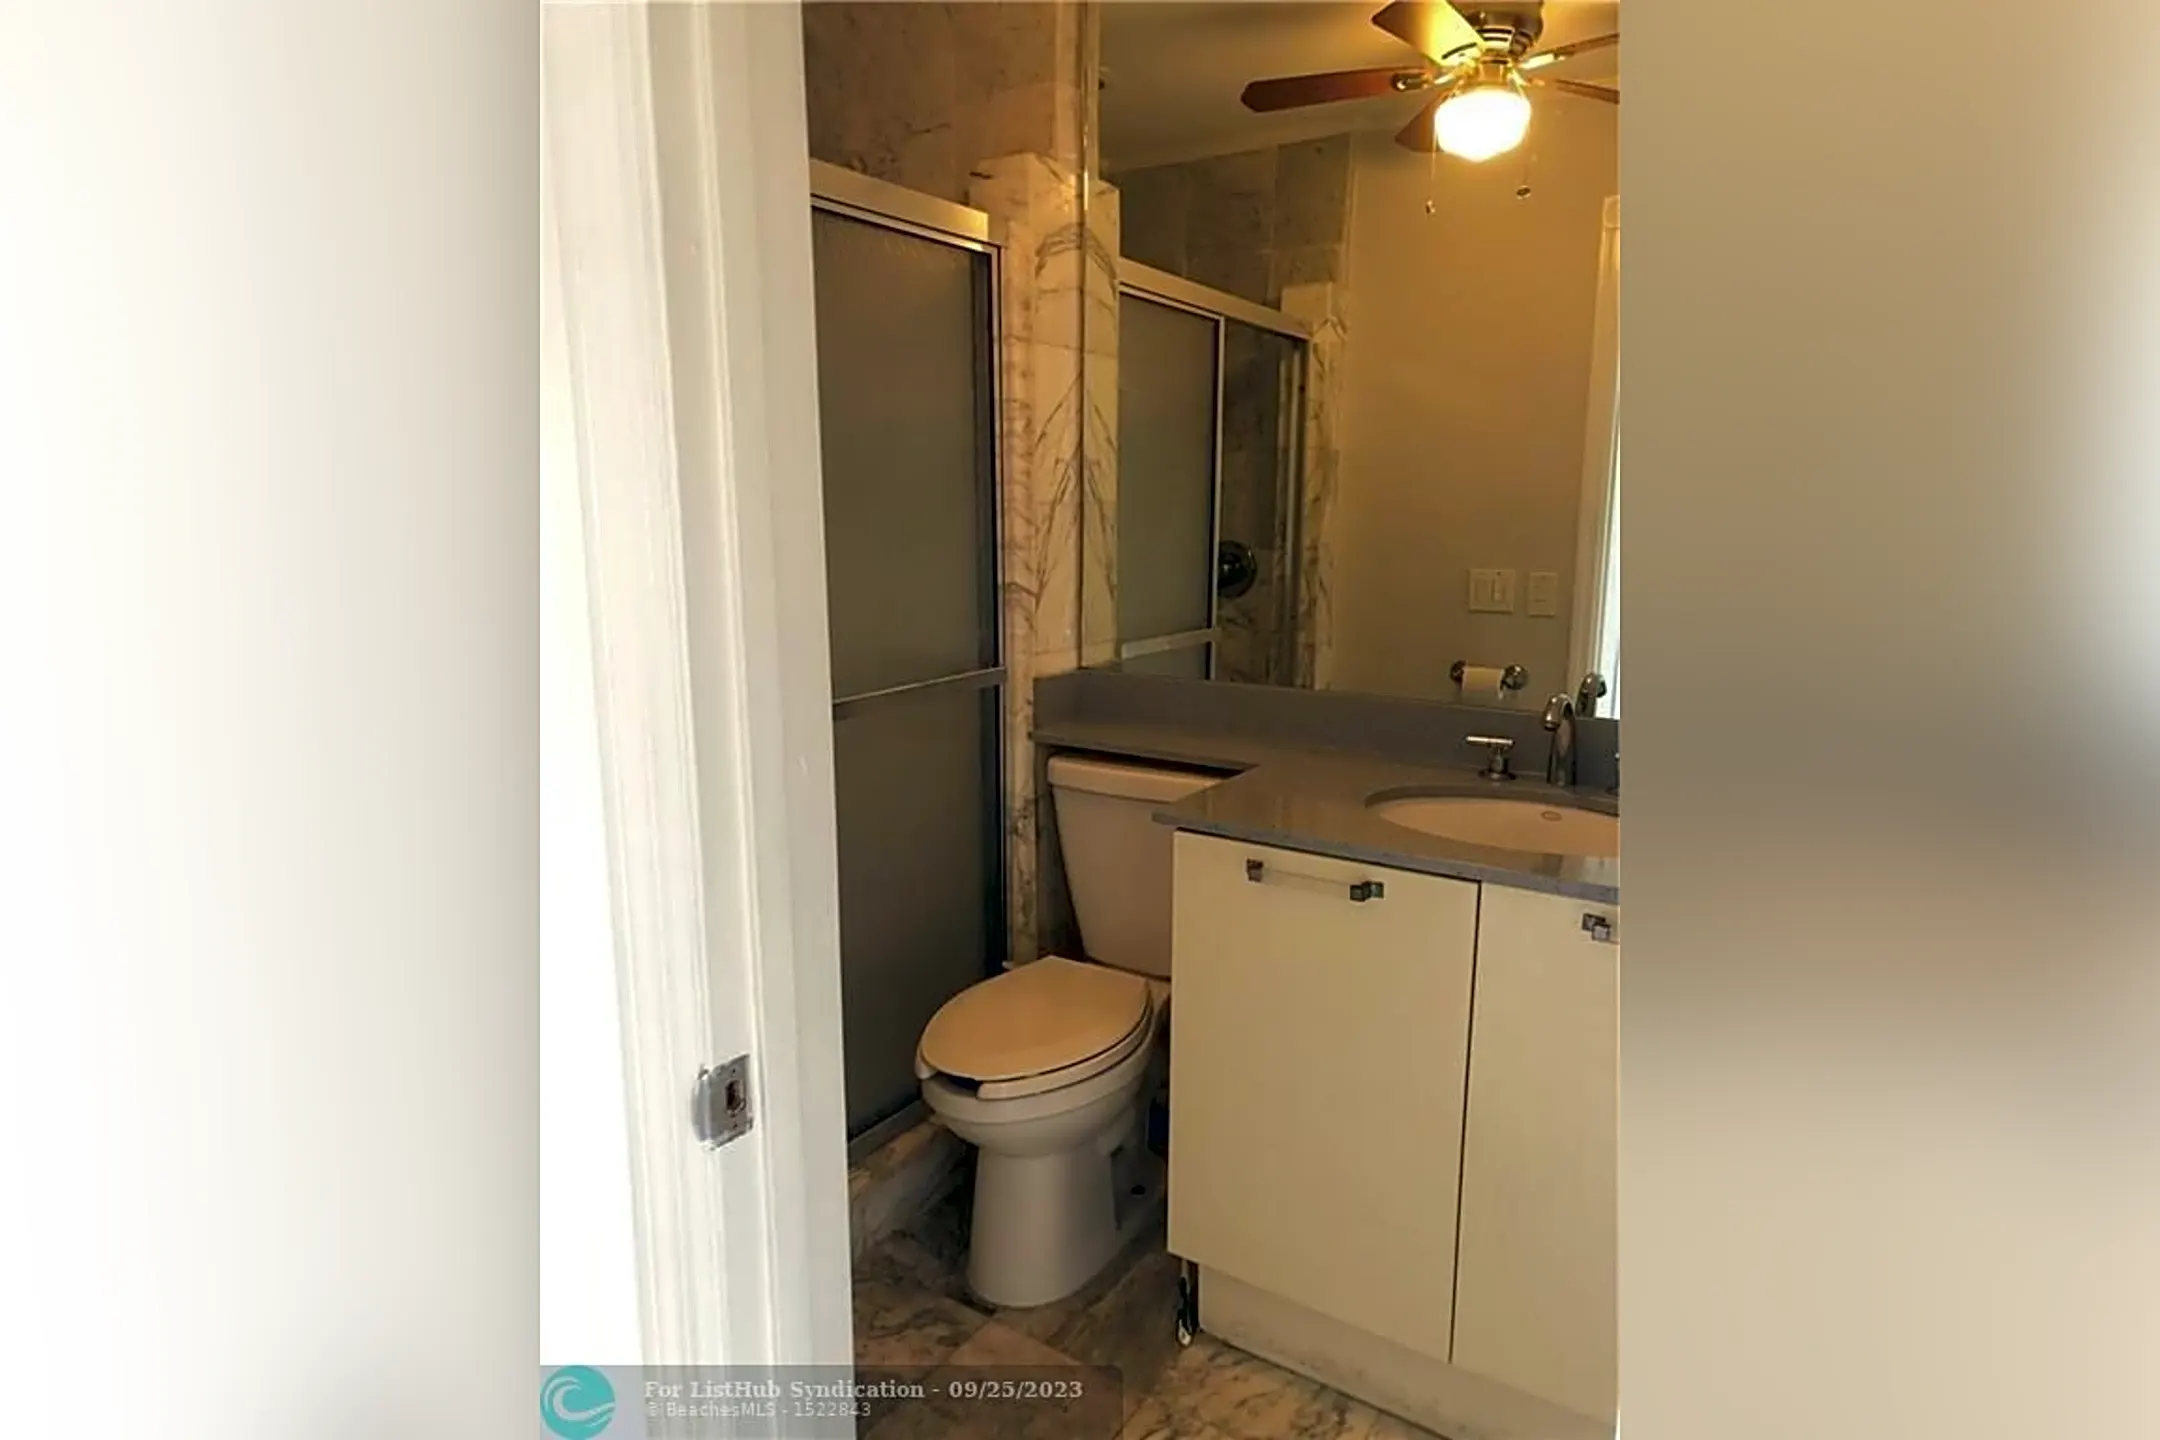 Bathroom - 1818 E Oakland Park Blvd #86 - Fort Lauderdale, FL